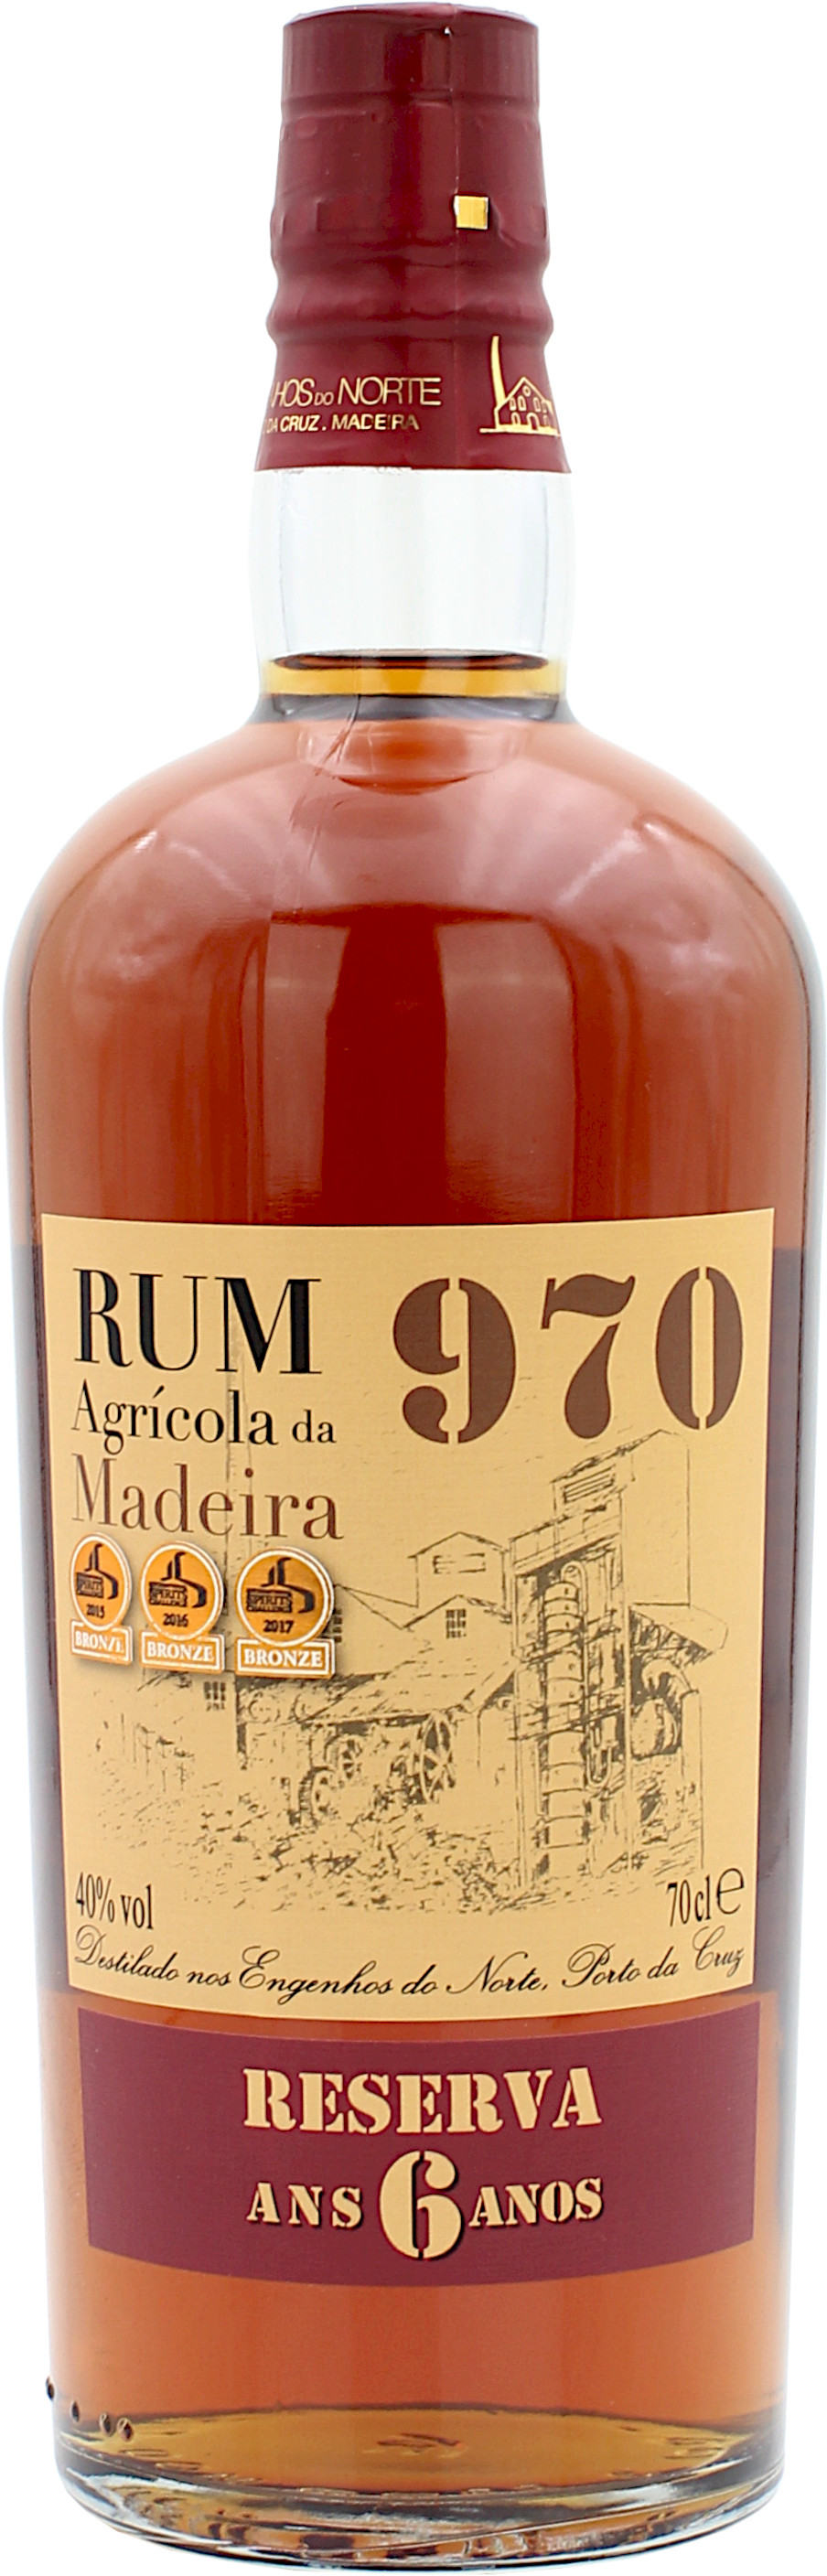 Rum 970 Agricola da Madeira Reserva Ans 6 Anos 40.0% 0,7l